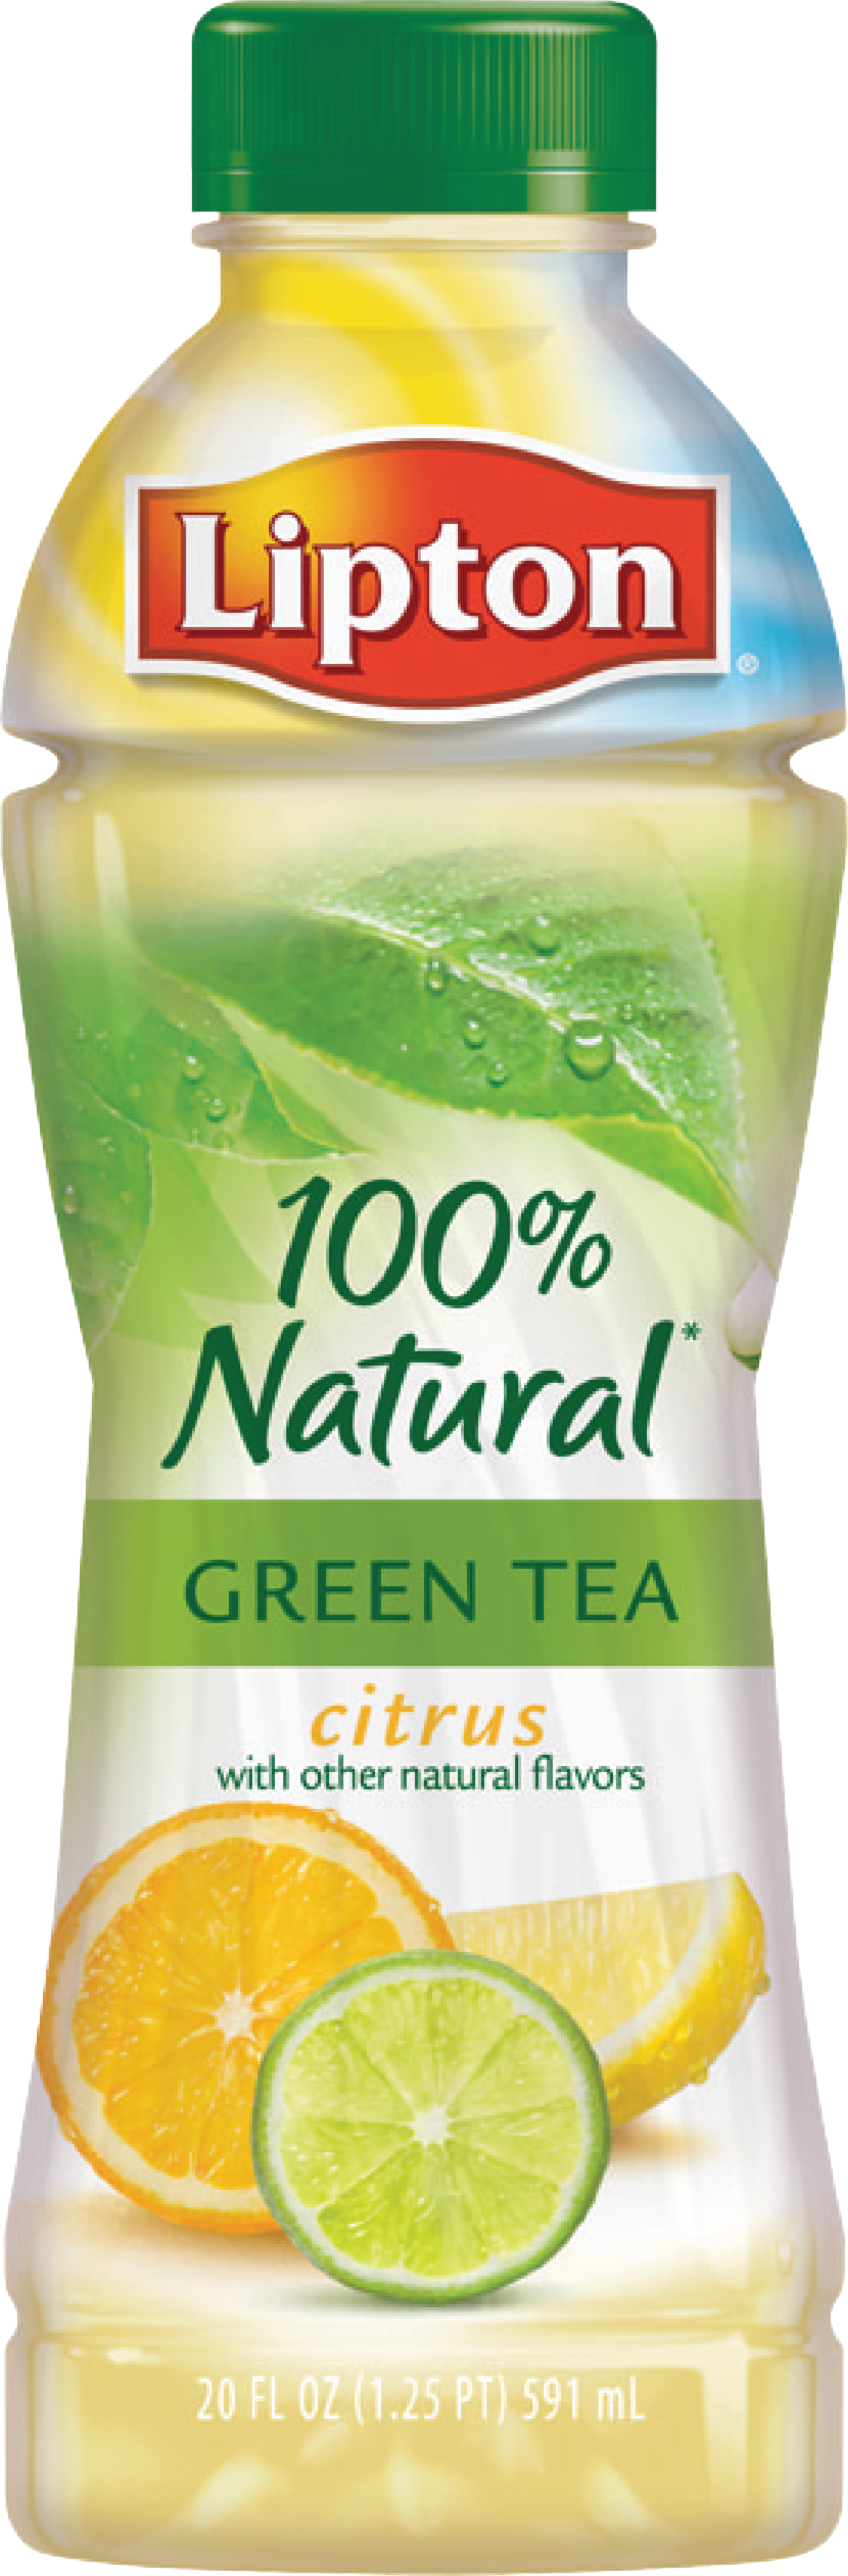 Lipton Citrus Green Tea Bottle PNG